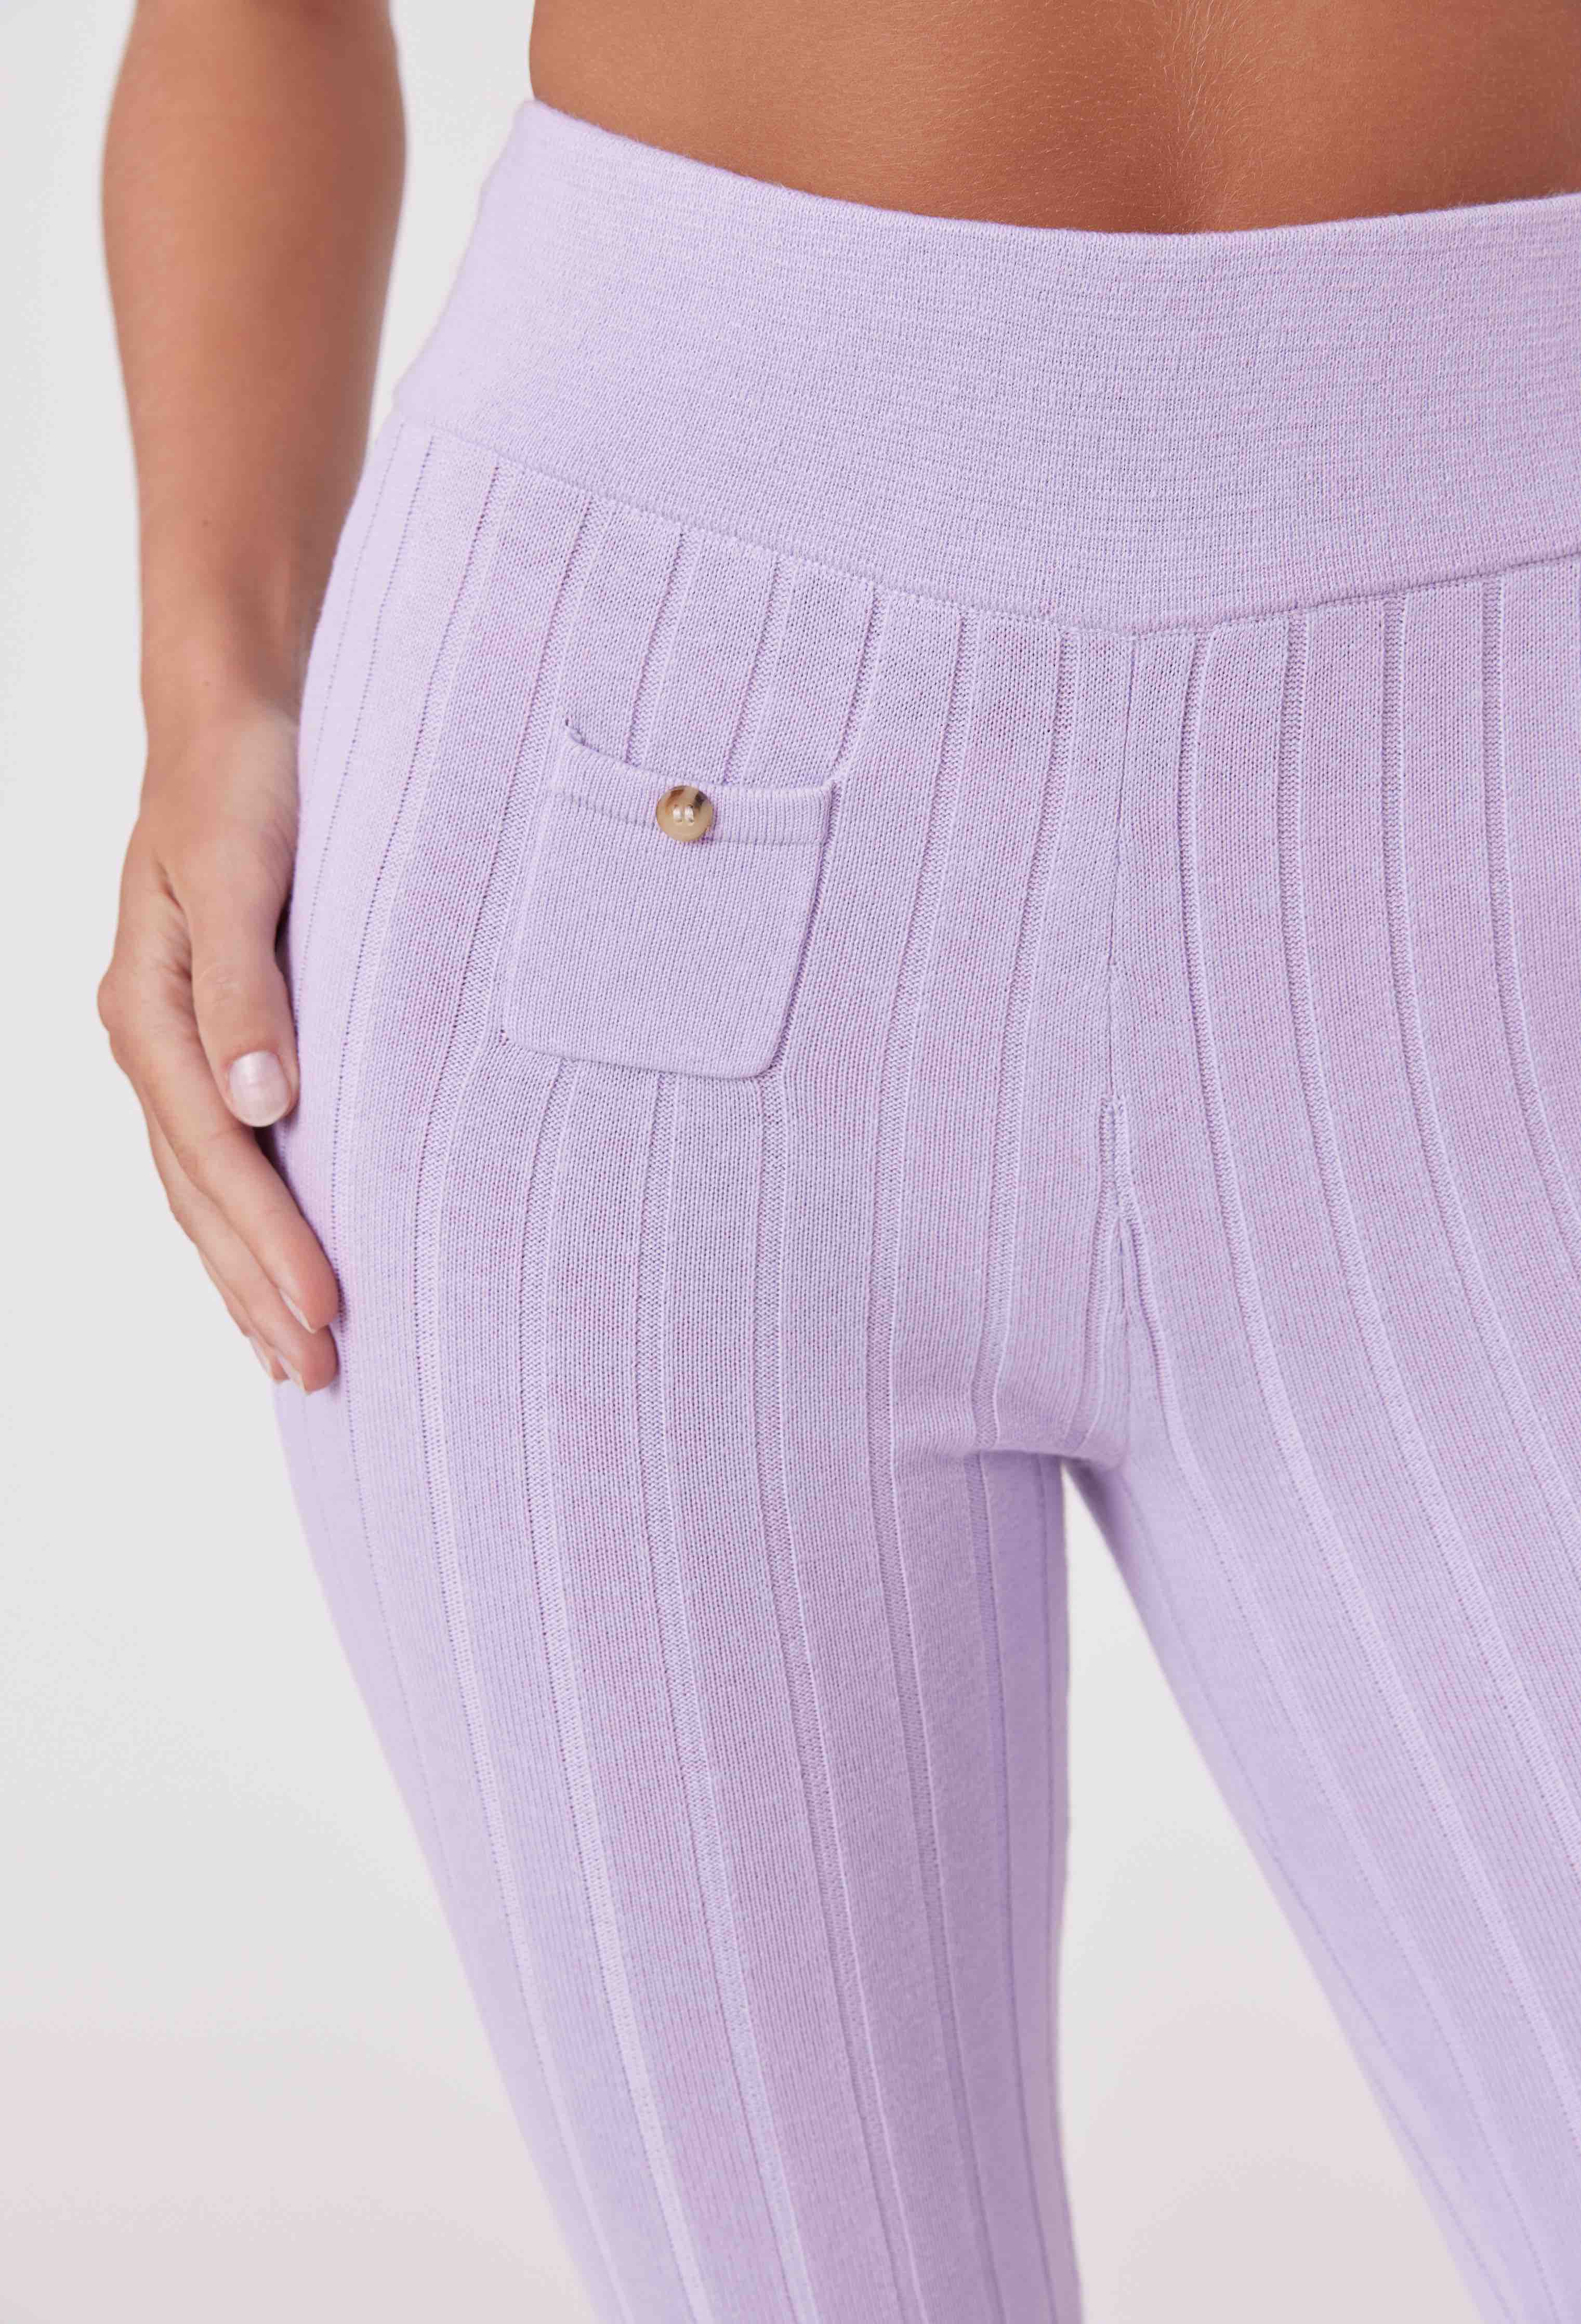 MNK ATELIER - Purple 80s Pants, buy at DOORS NYC